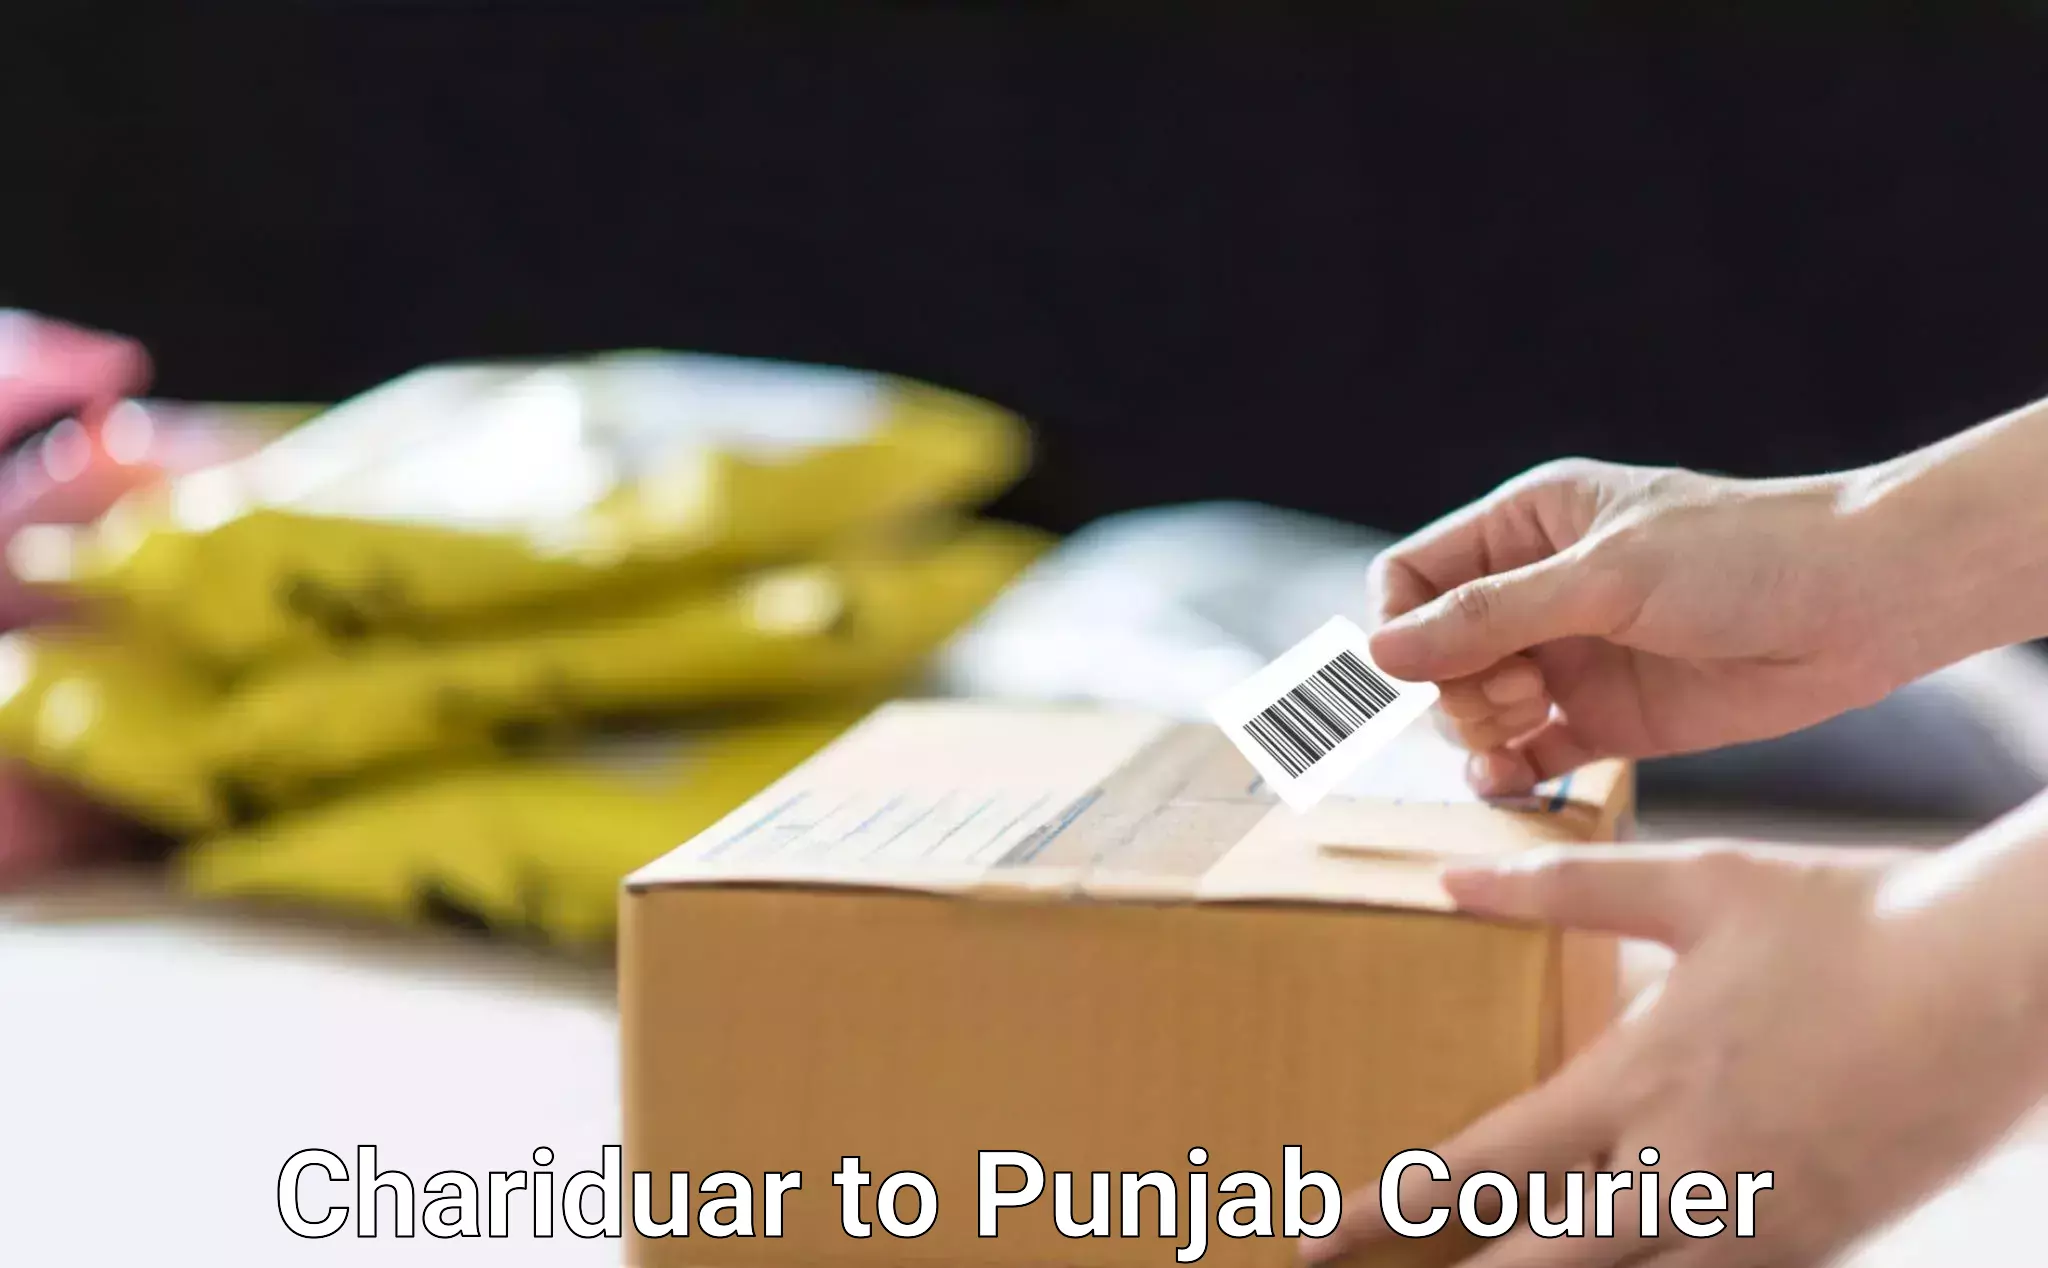 Quick dispatch service Chariduar to Punjab